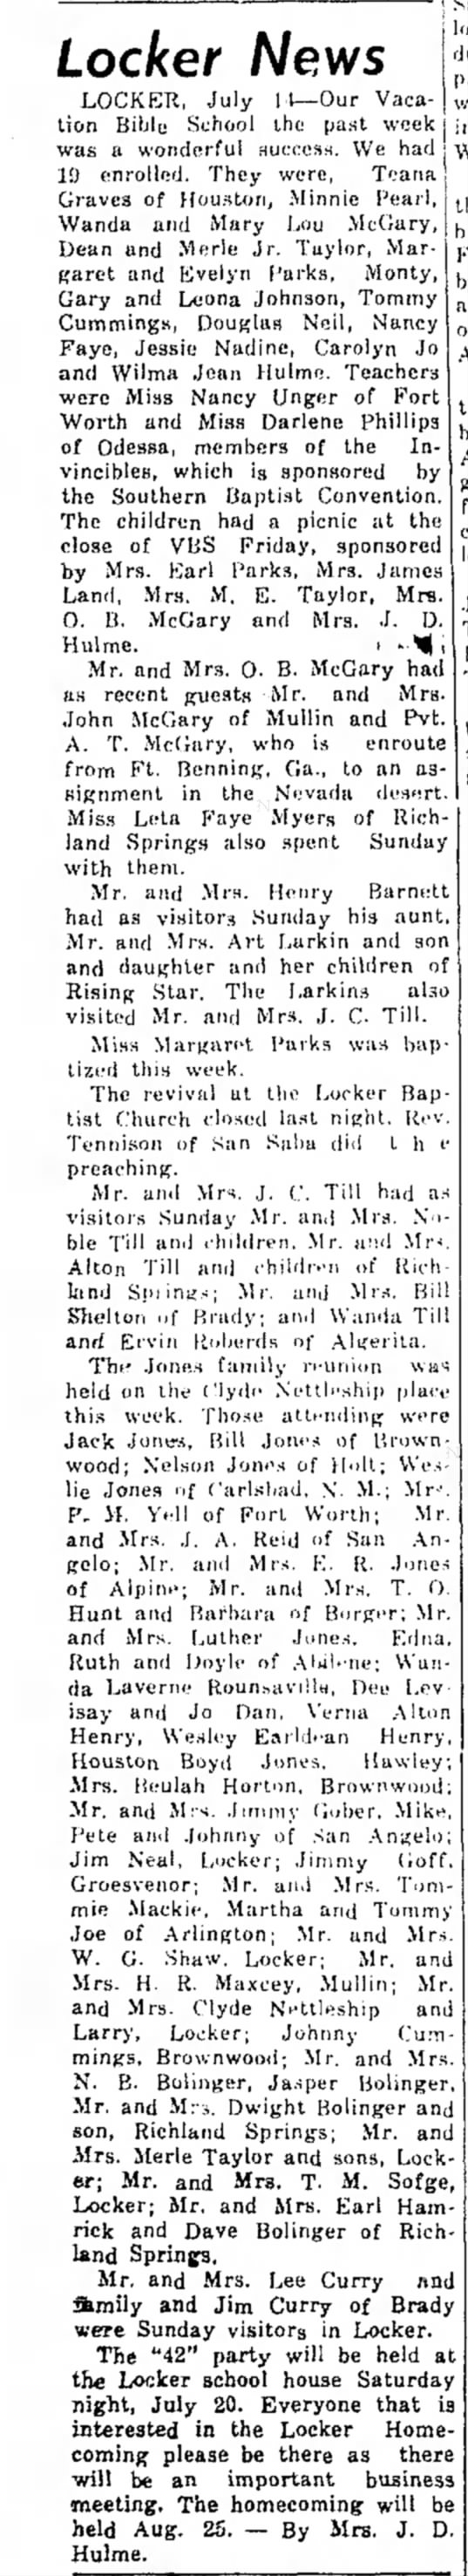 The San Saba News and Star 18 Jul 1957 Pg. 7 Locker News